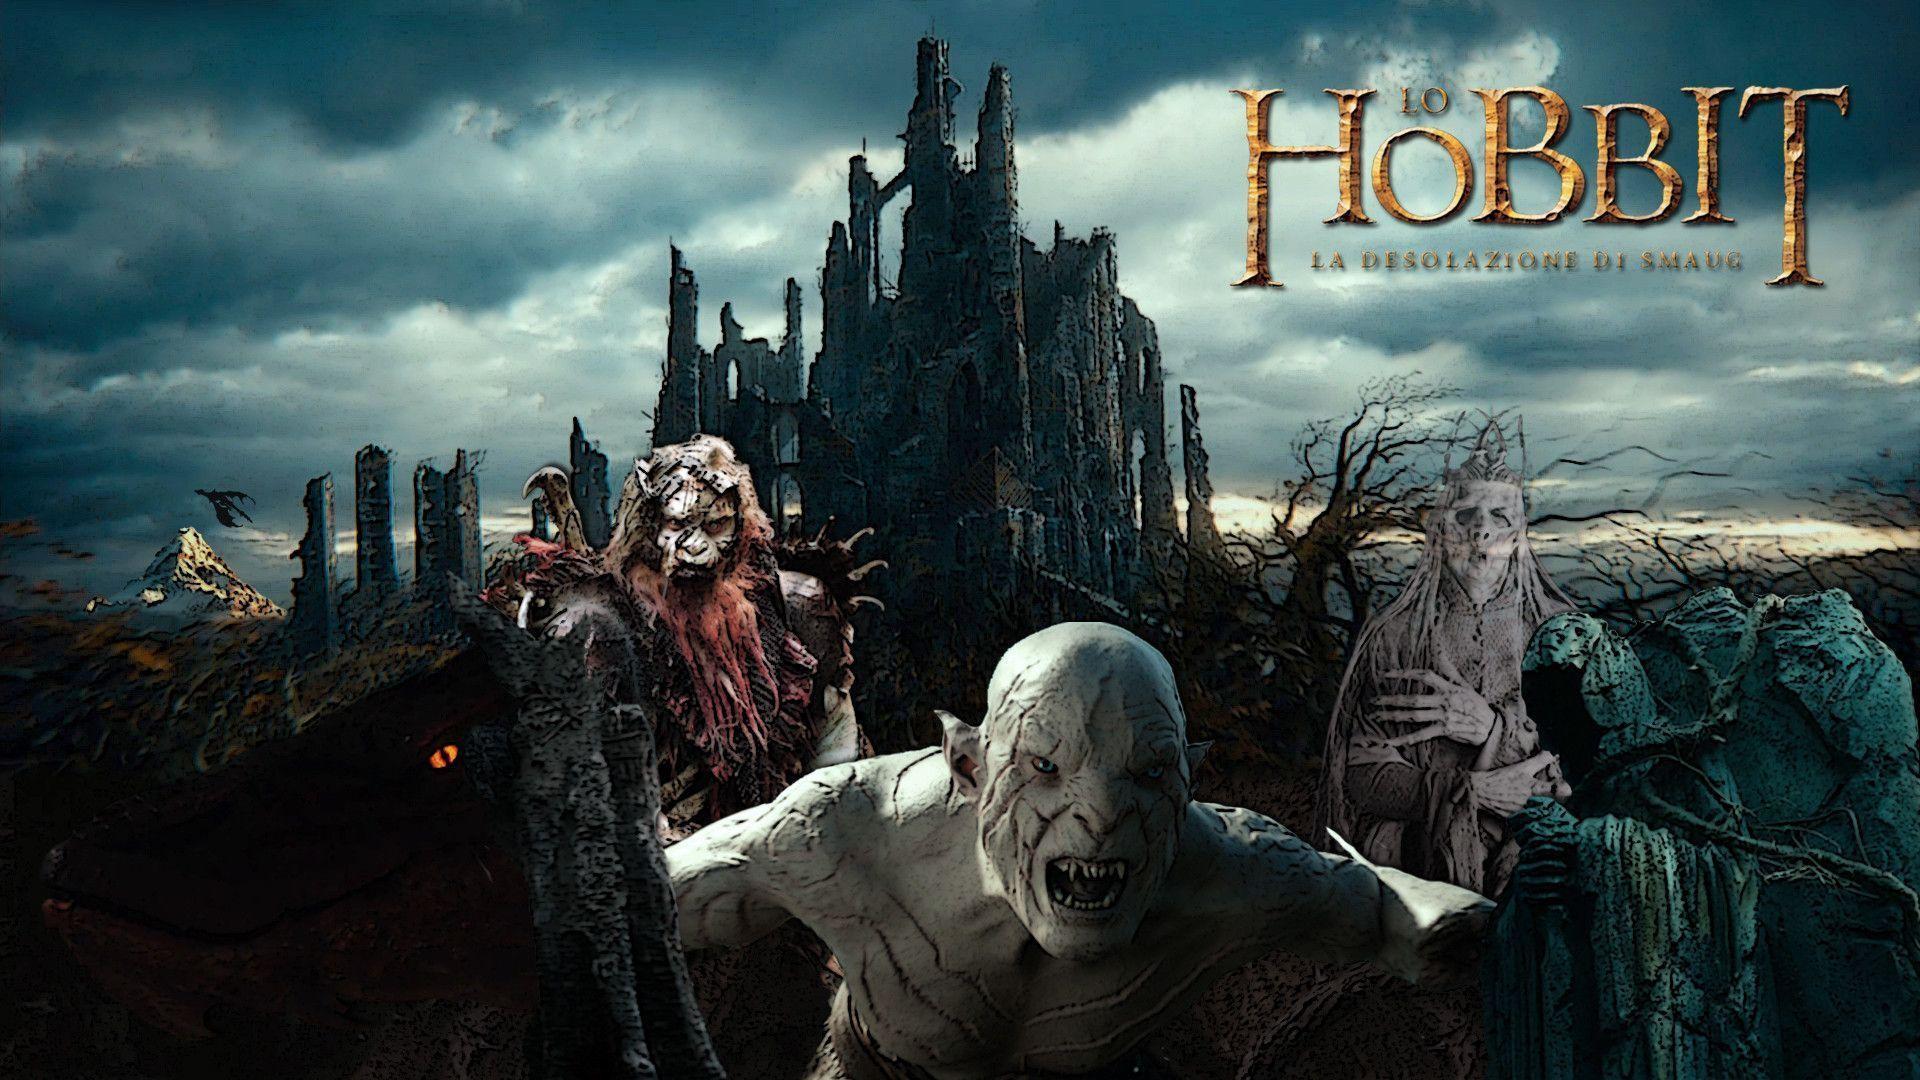 The Hobbit Movie HD Wallpaper. The Hobbit Desolation of Smaug